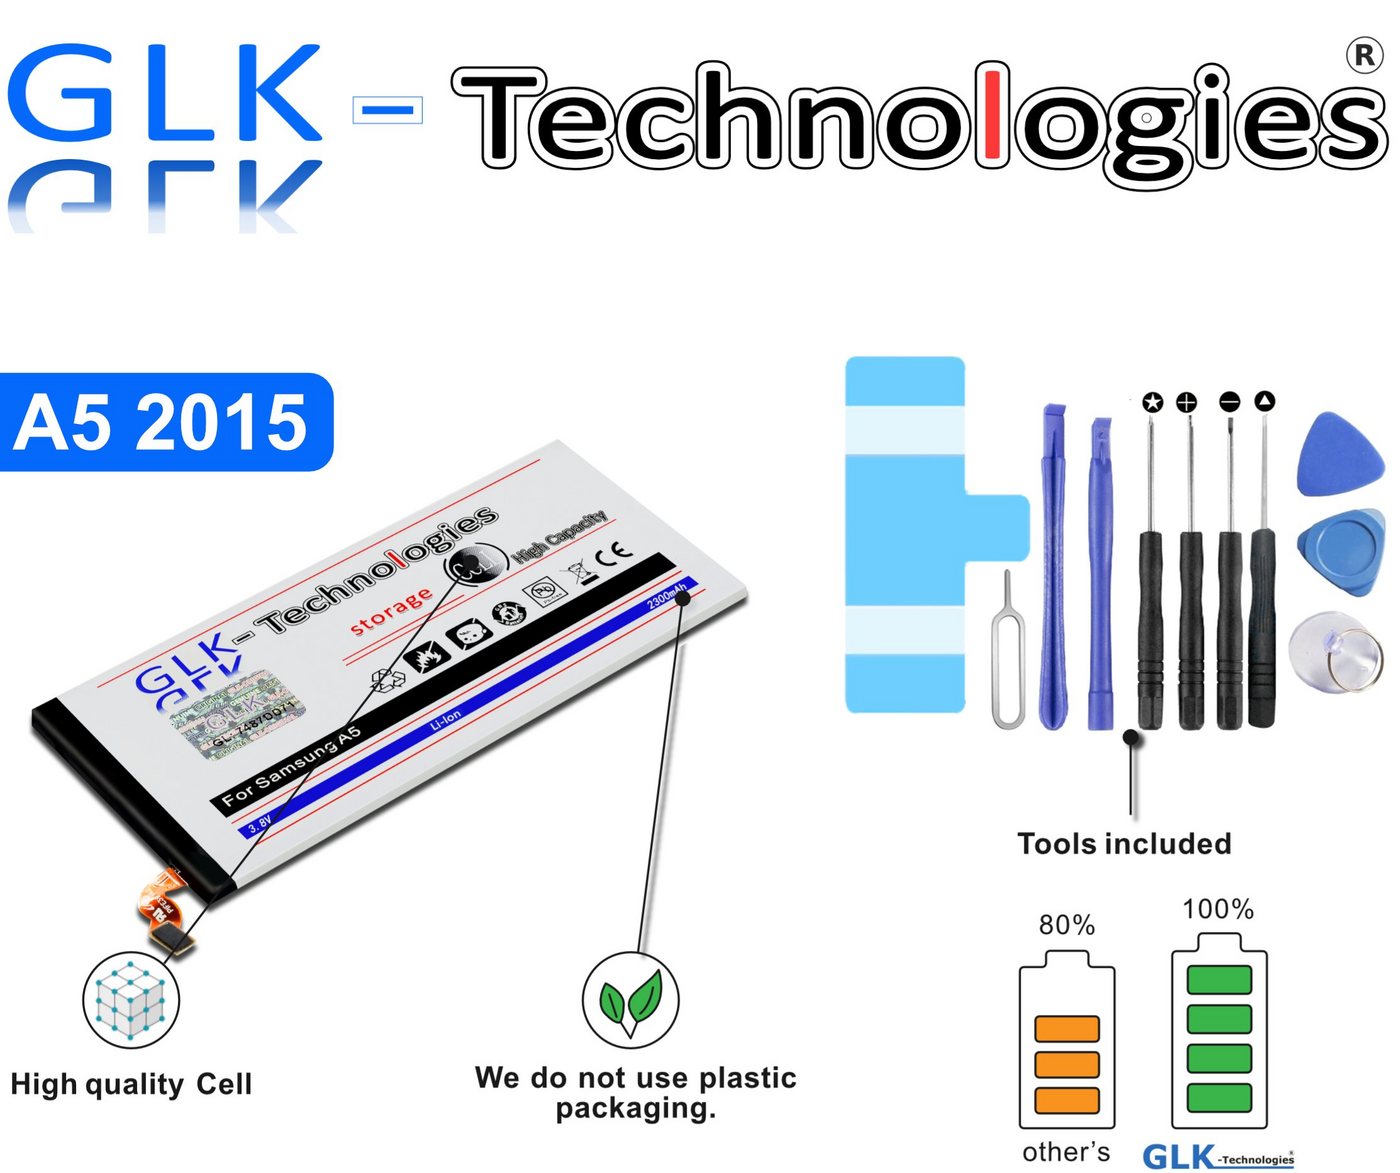 GLK-Technologies High Power Ersatzakku kompatibel mit Samsung Galaxy A5 SM-A500F 2015 EB-BA500ABE, Original GLK-Technologies Battery, accu, 2300 mAh Akku, inkl. Werkzeug Set Kit NEU Smartphone-Akku 2300 mAh (3.8 V) von GLK-Technologies